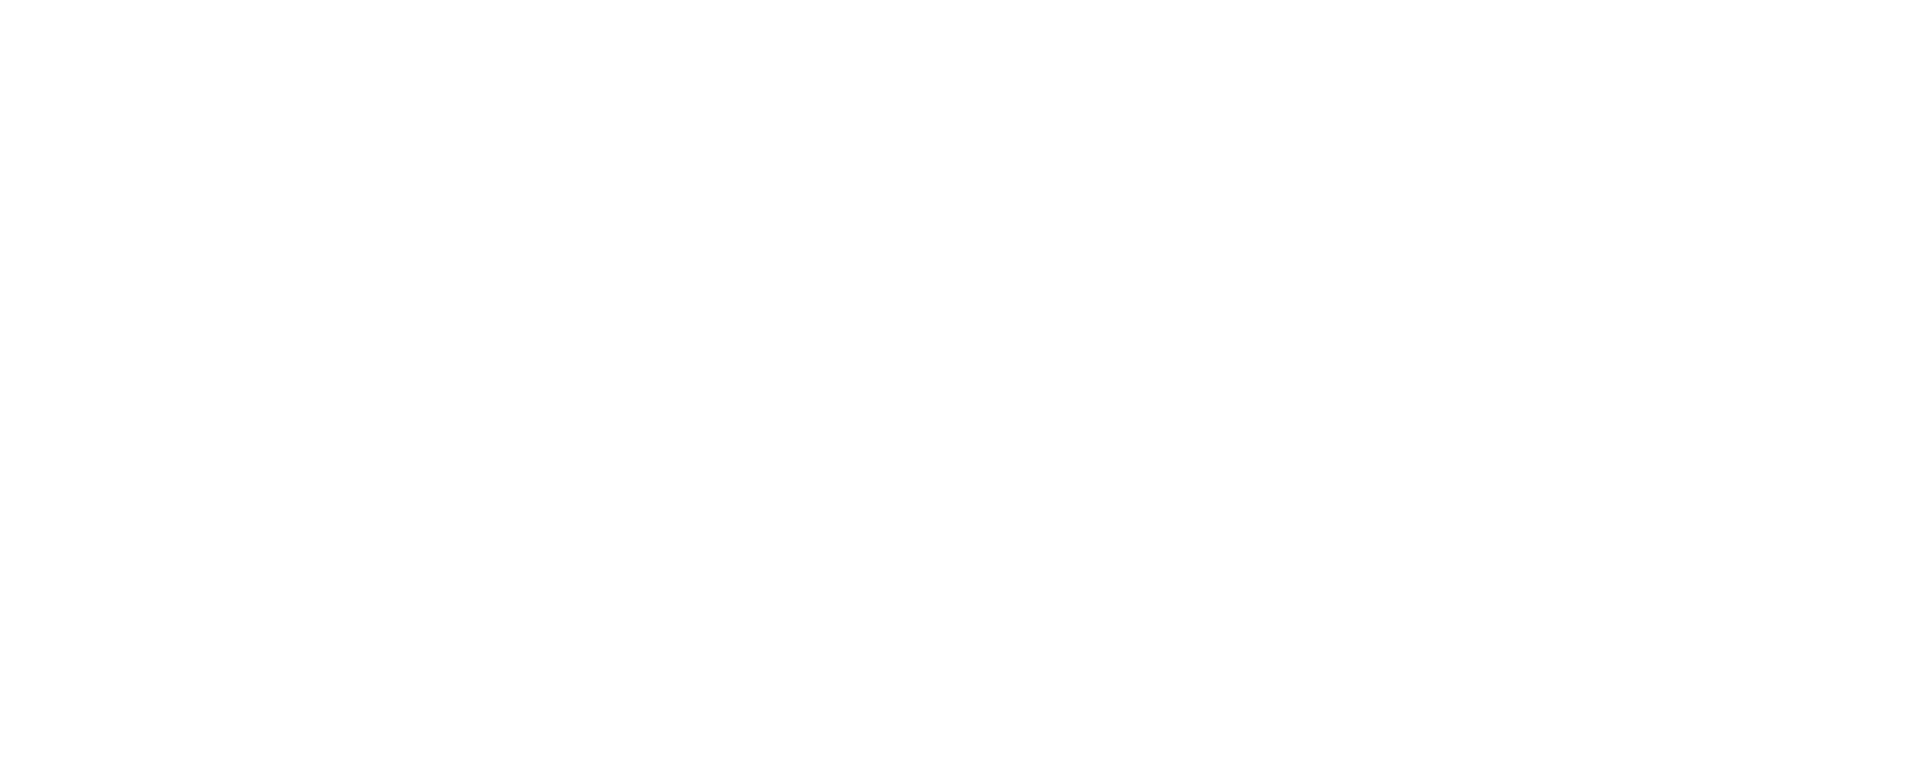 digital transformation innovate with digital technology